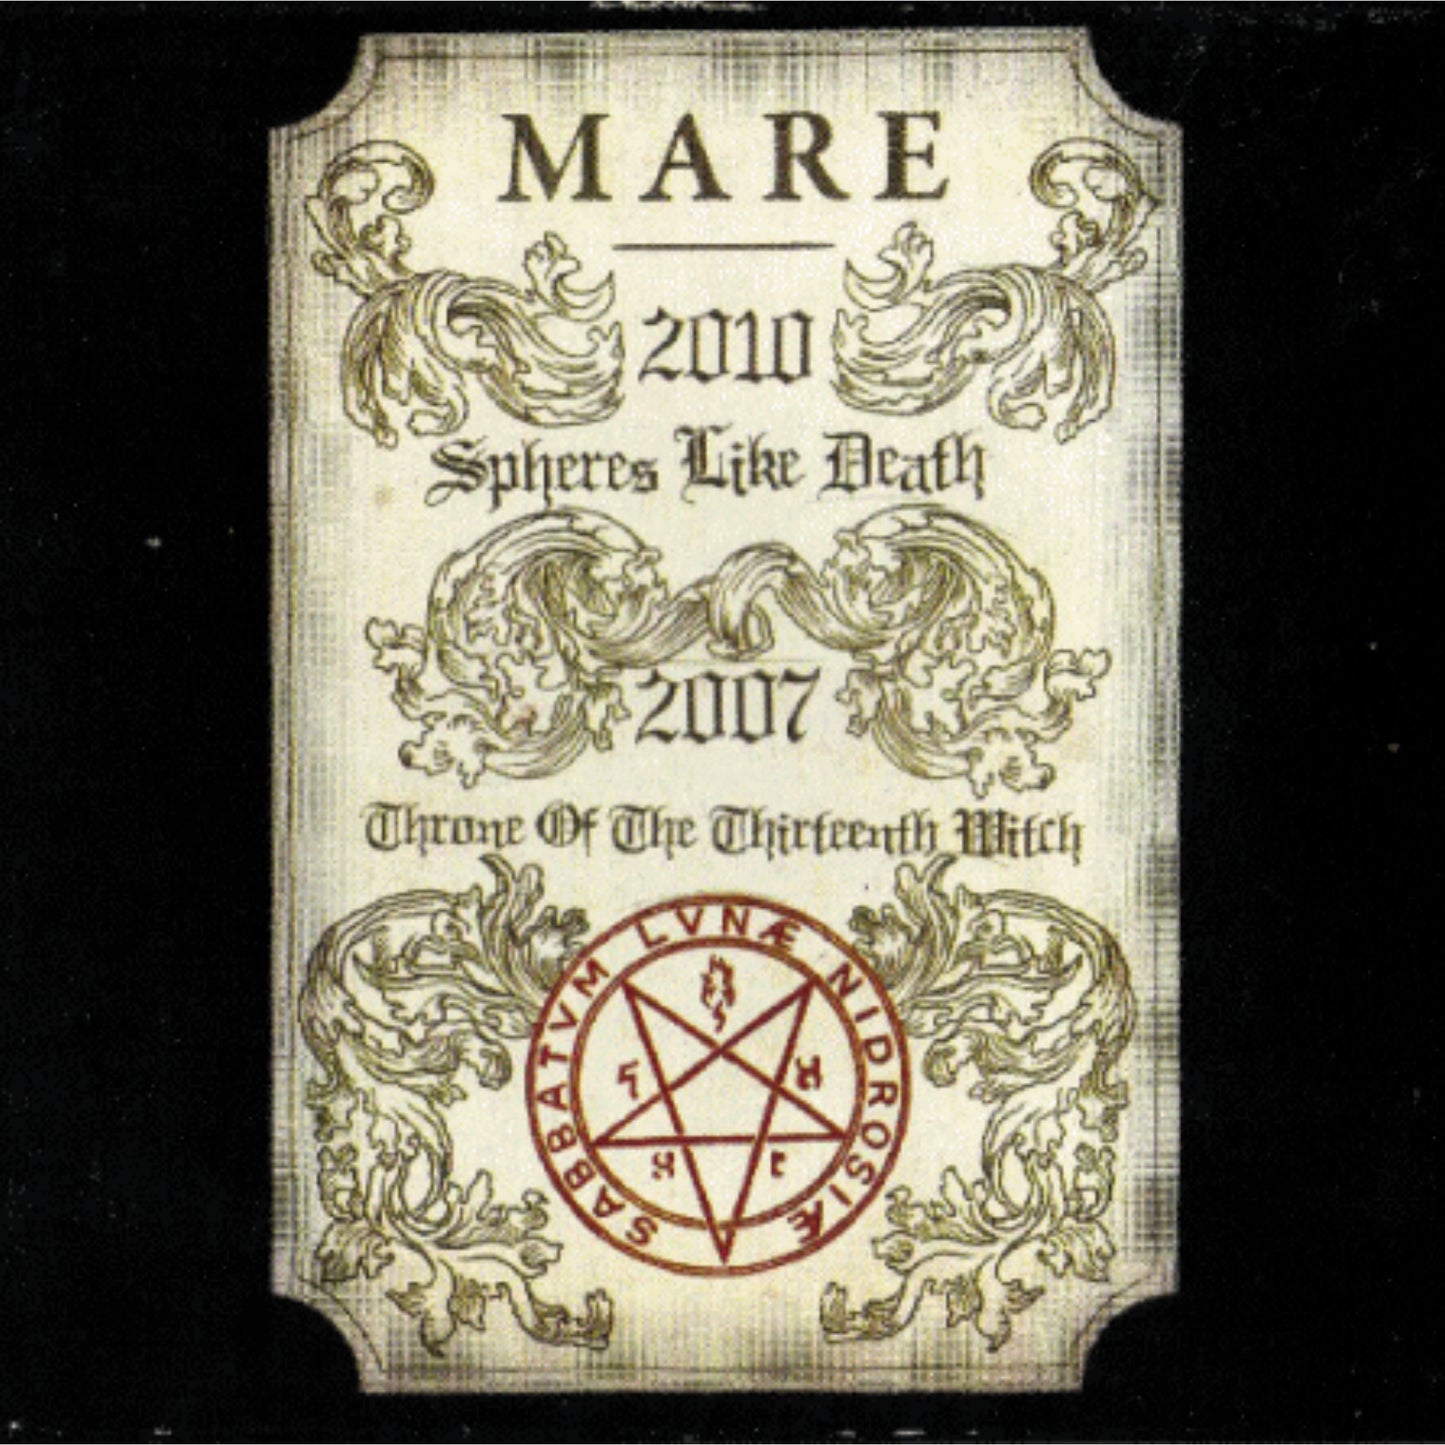 Mare - Spheres Like Death (Black Vinyl)